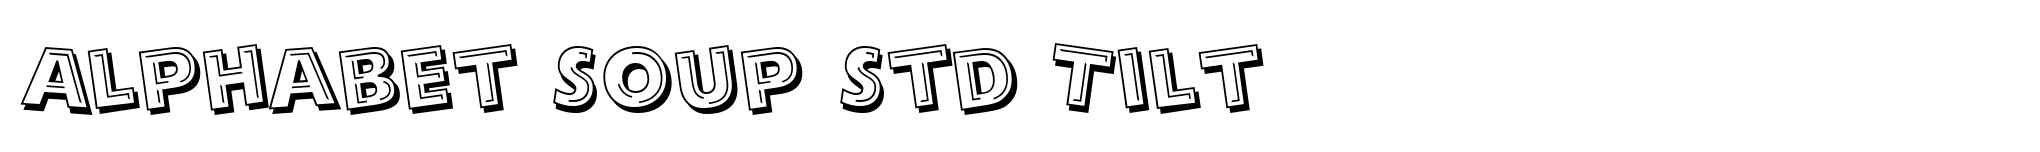 Alphabet Soup Std Tilt image